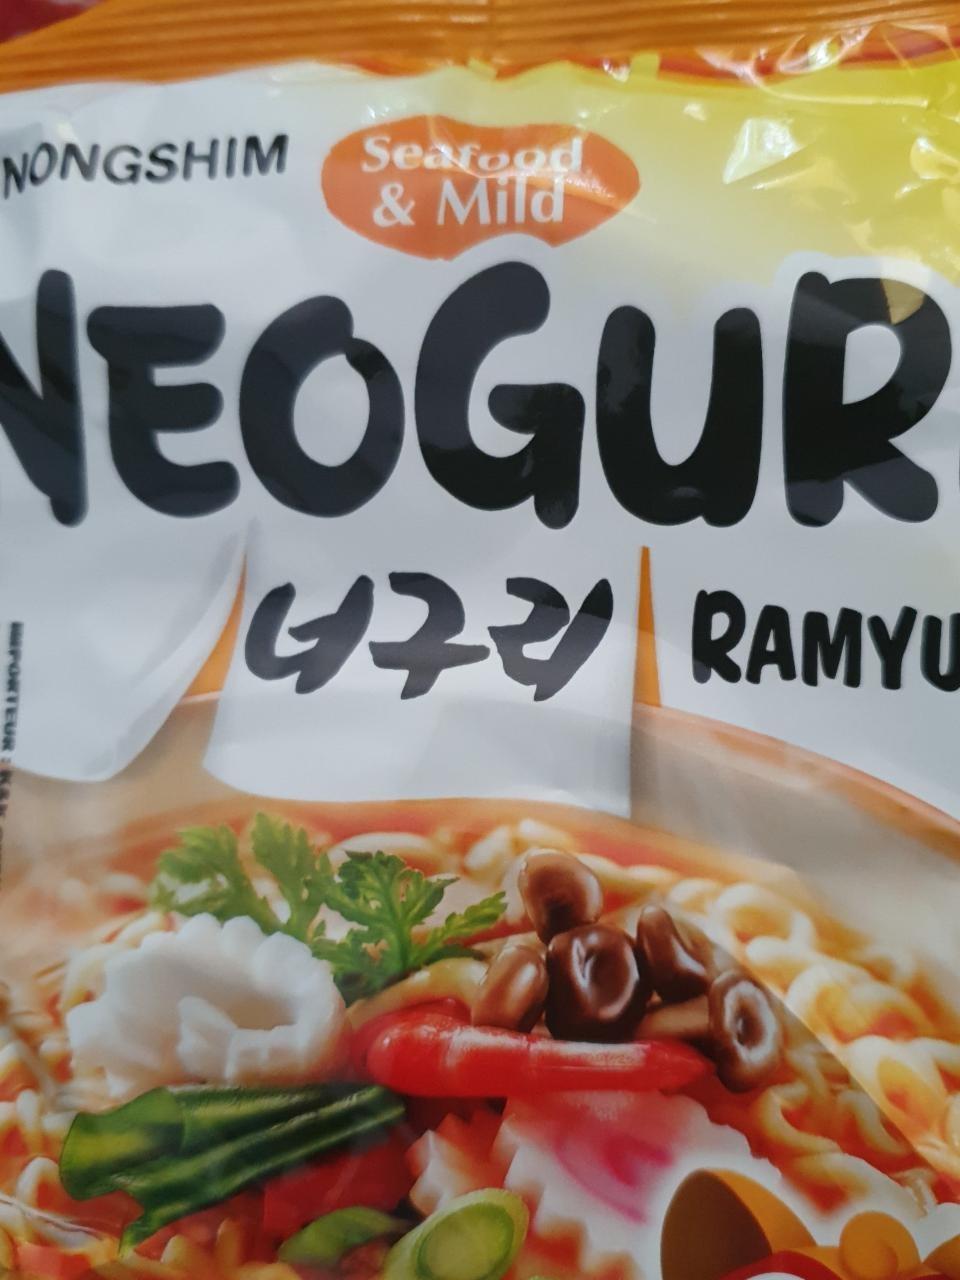 Képek - Neoguri Ramyun Seafood & mild Nongshim